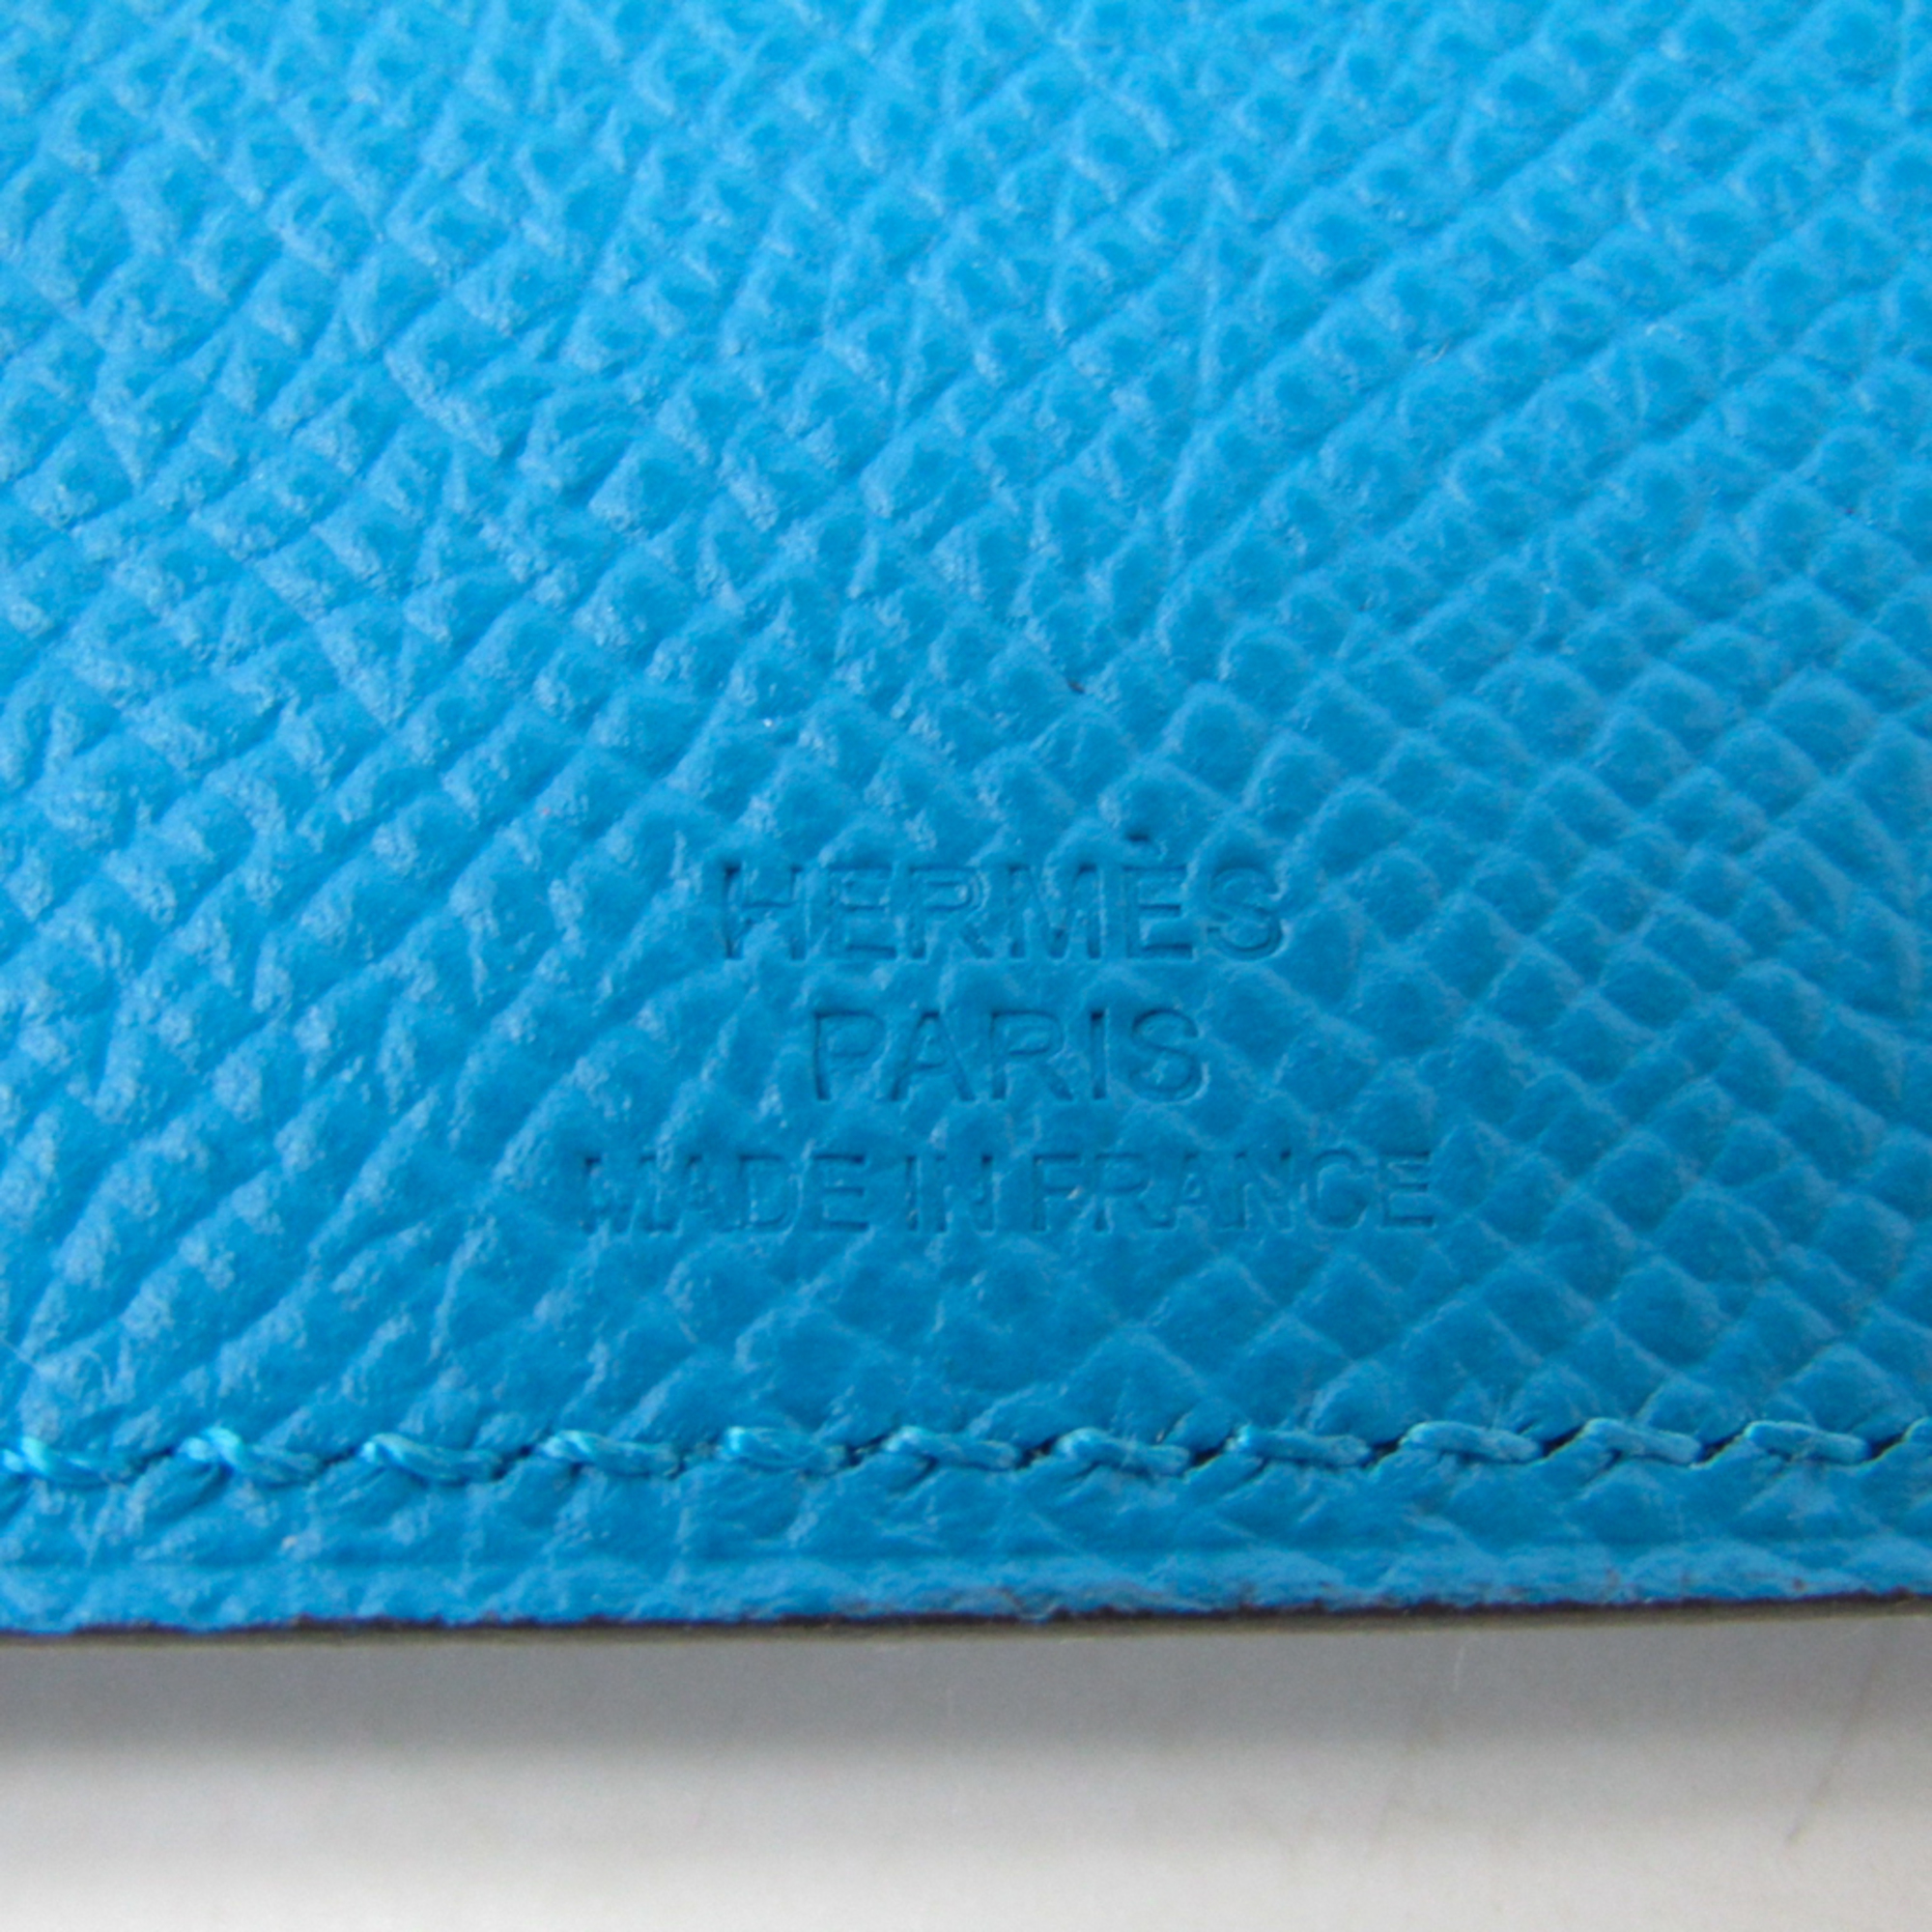 Hermes Tarmac PM Epsom Leather Passport Cover Blue